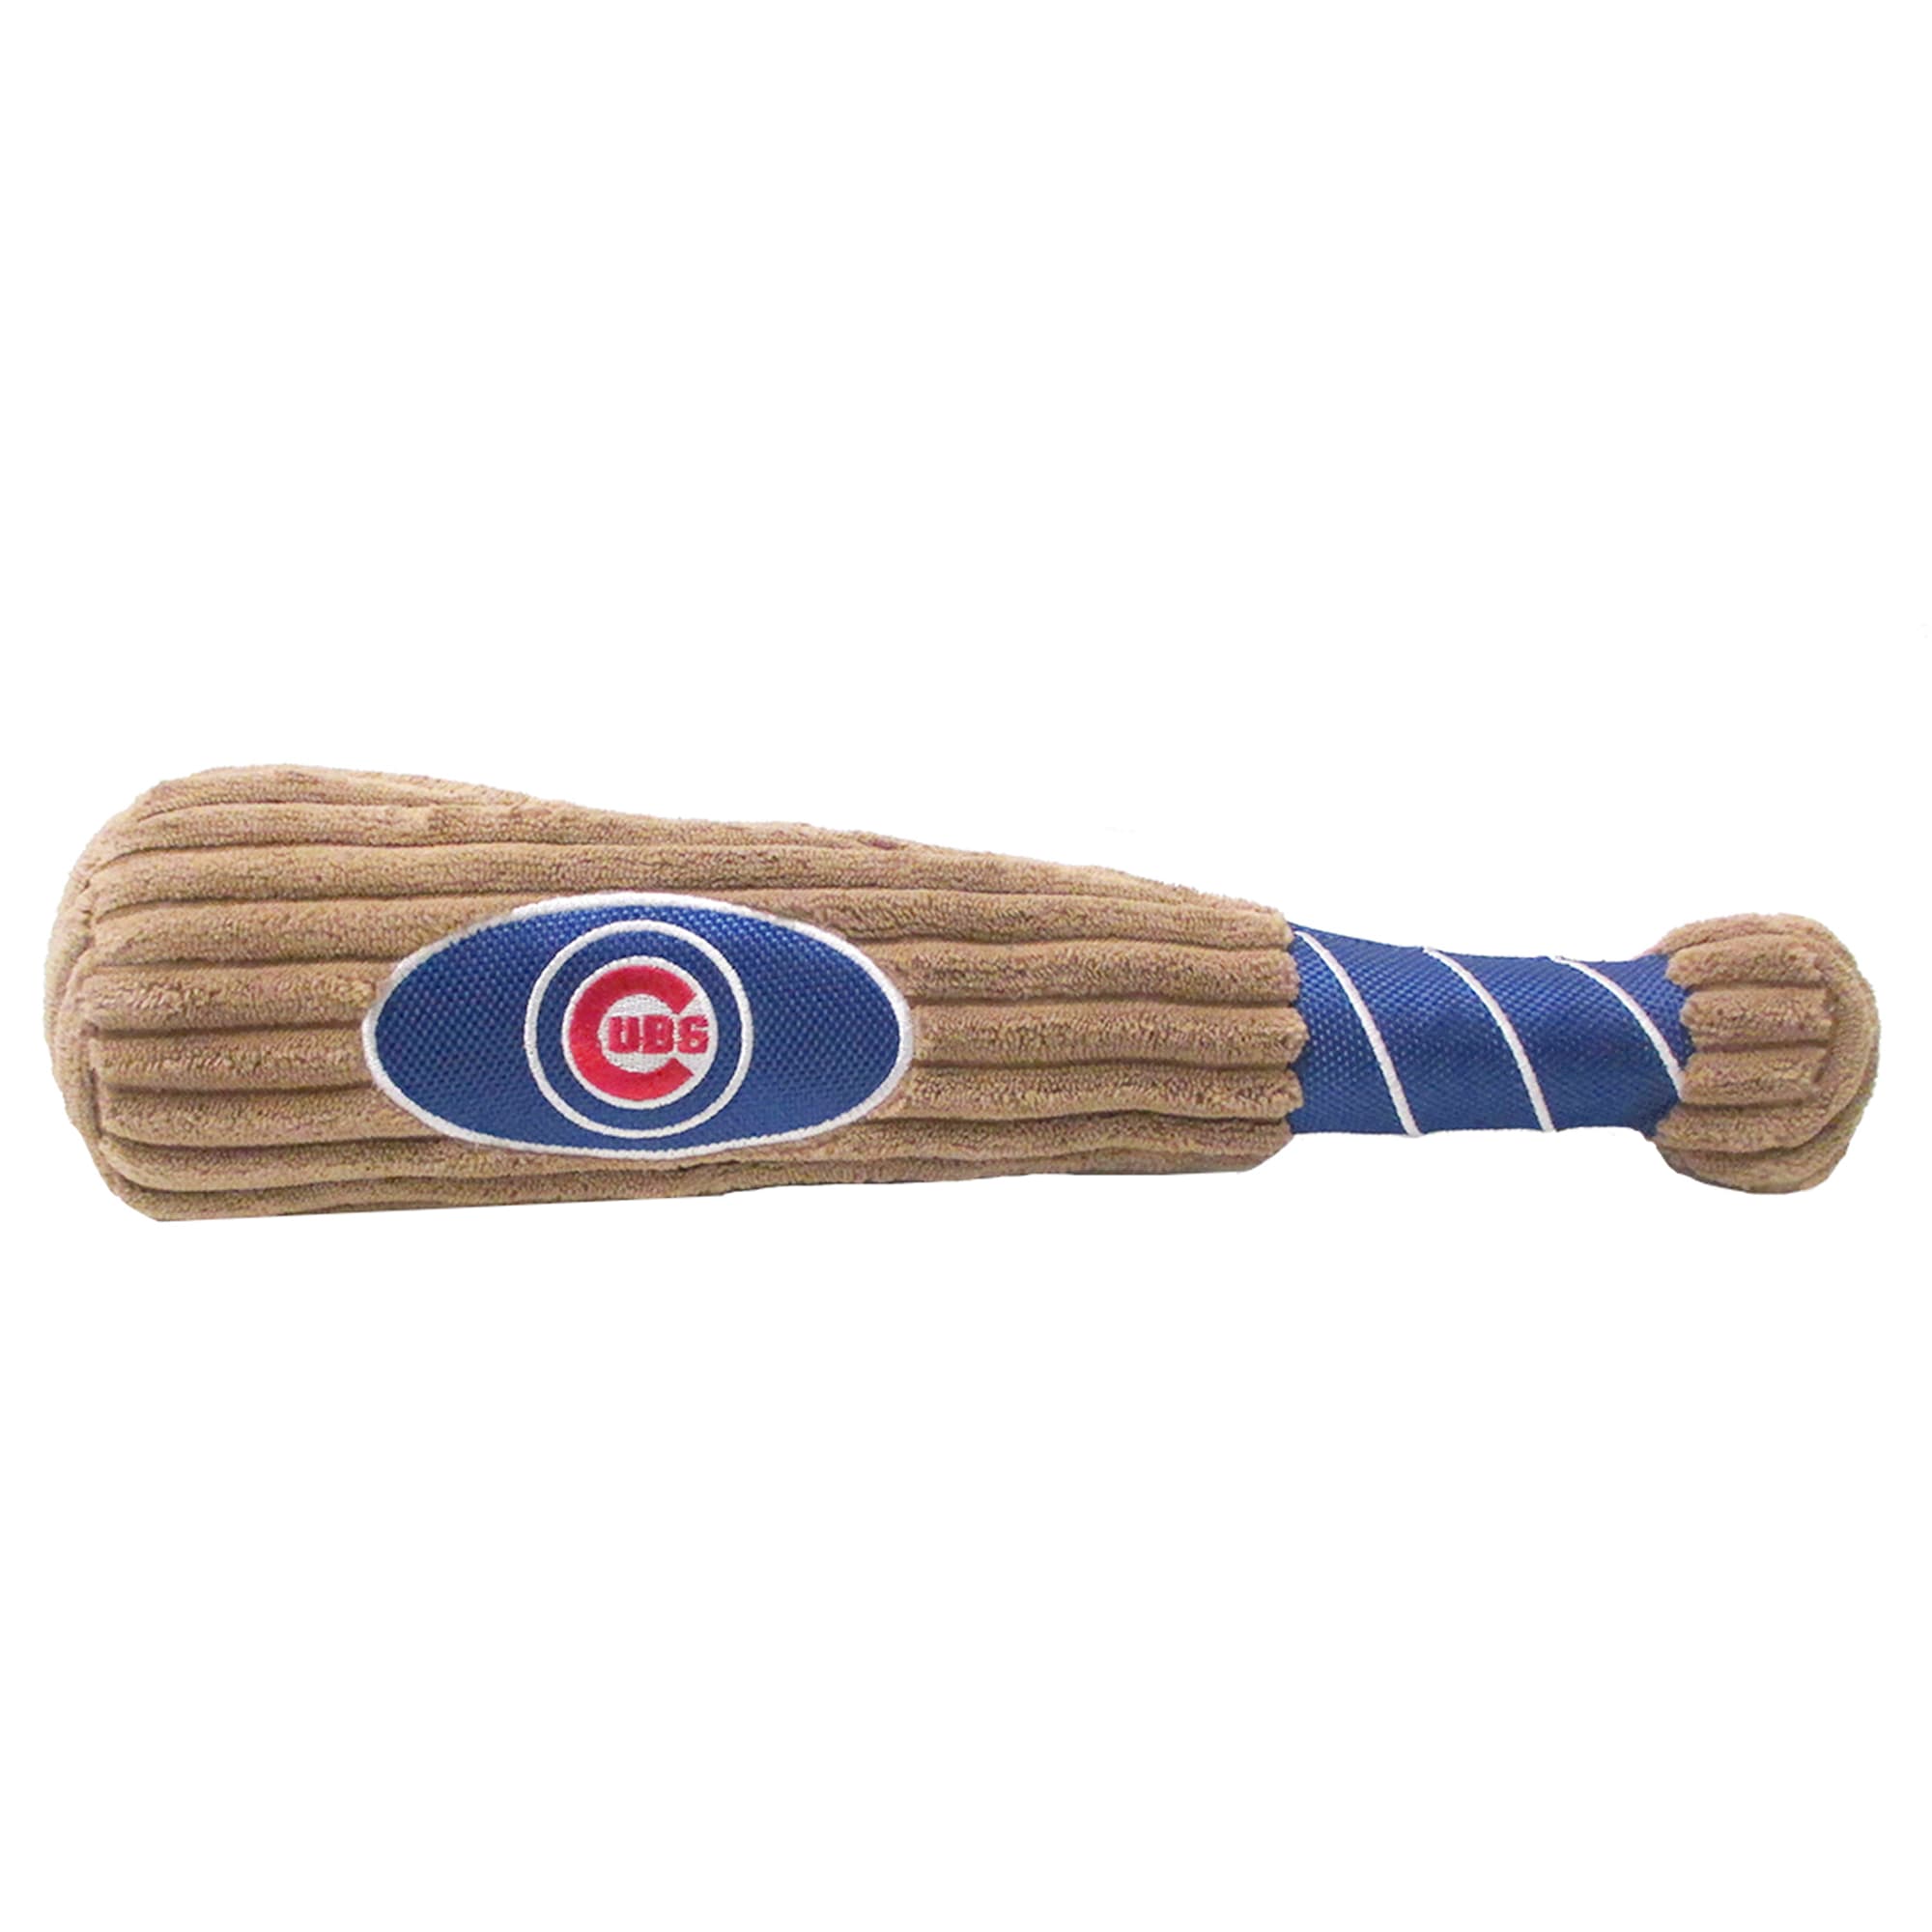 Mlb Pets First Pet Baseball Jersey - Chicago Cubs : Target